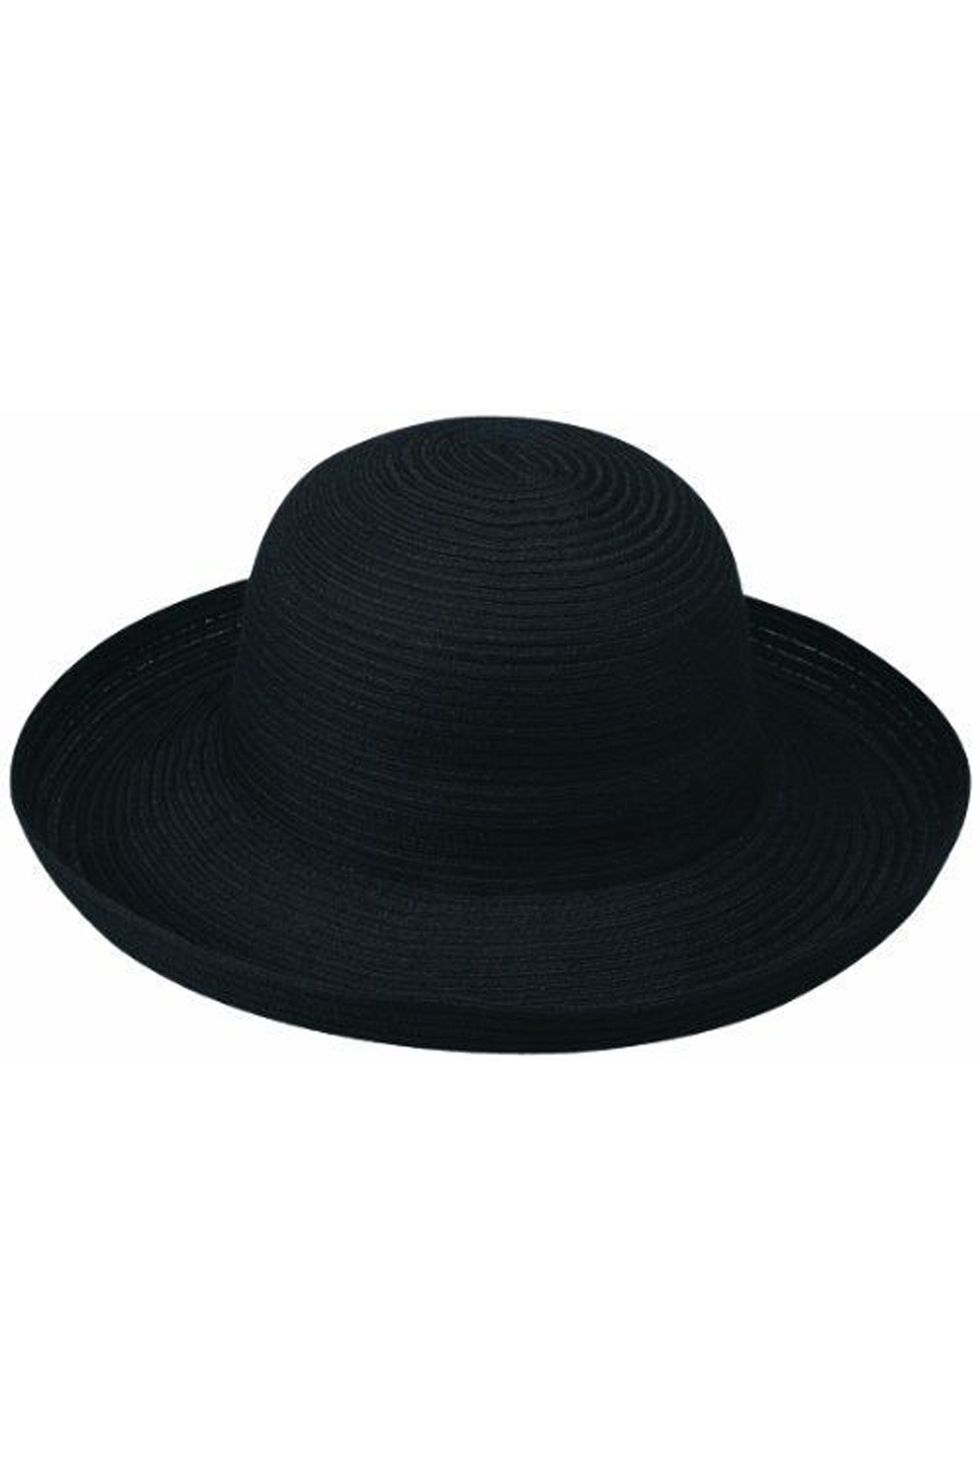 Sydney Sun Hat